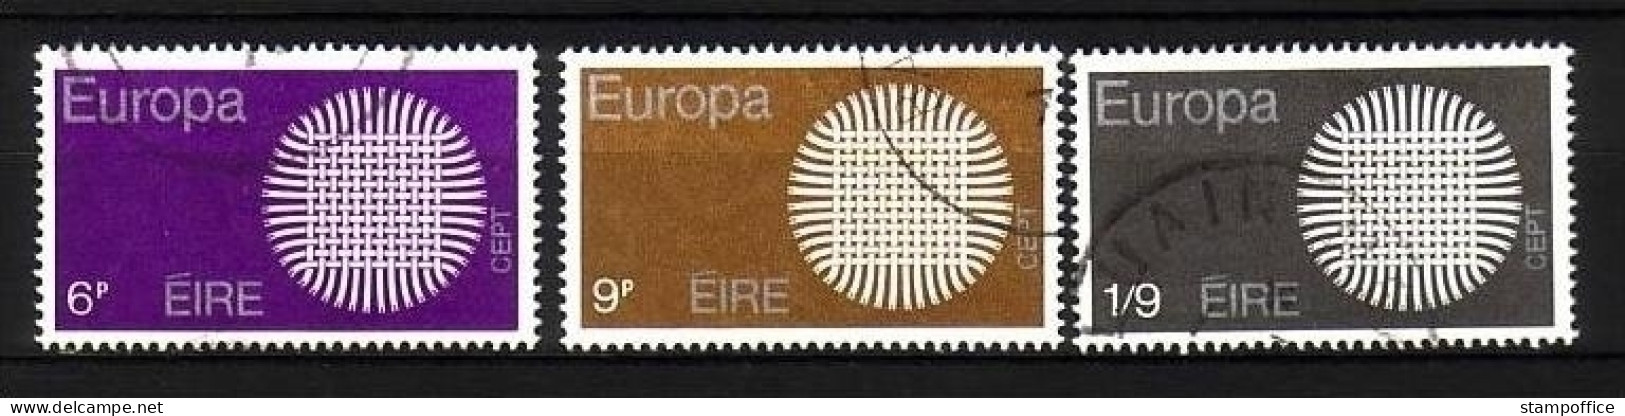 IRLAND MI-NR. 239-241 O EUROPA 1970 SONNENSYMBOL - 1970